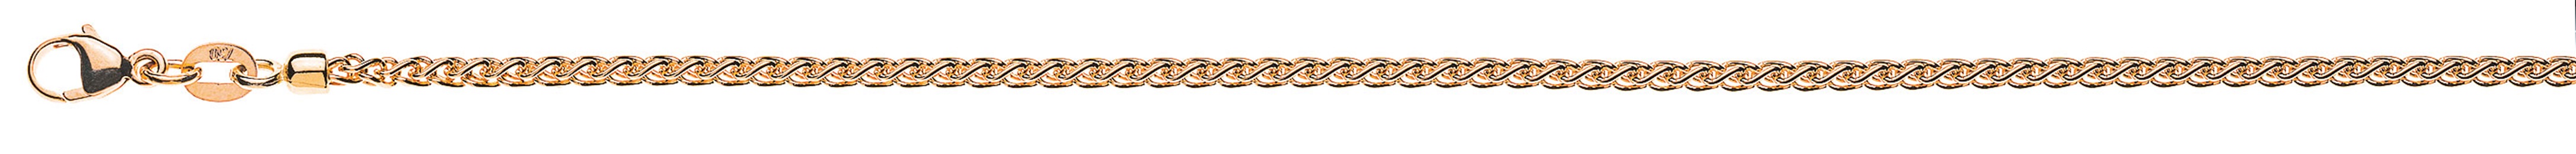 AURONOS Prestige Collier chaîne en or rose 18K 45cm 2.15mm